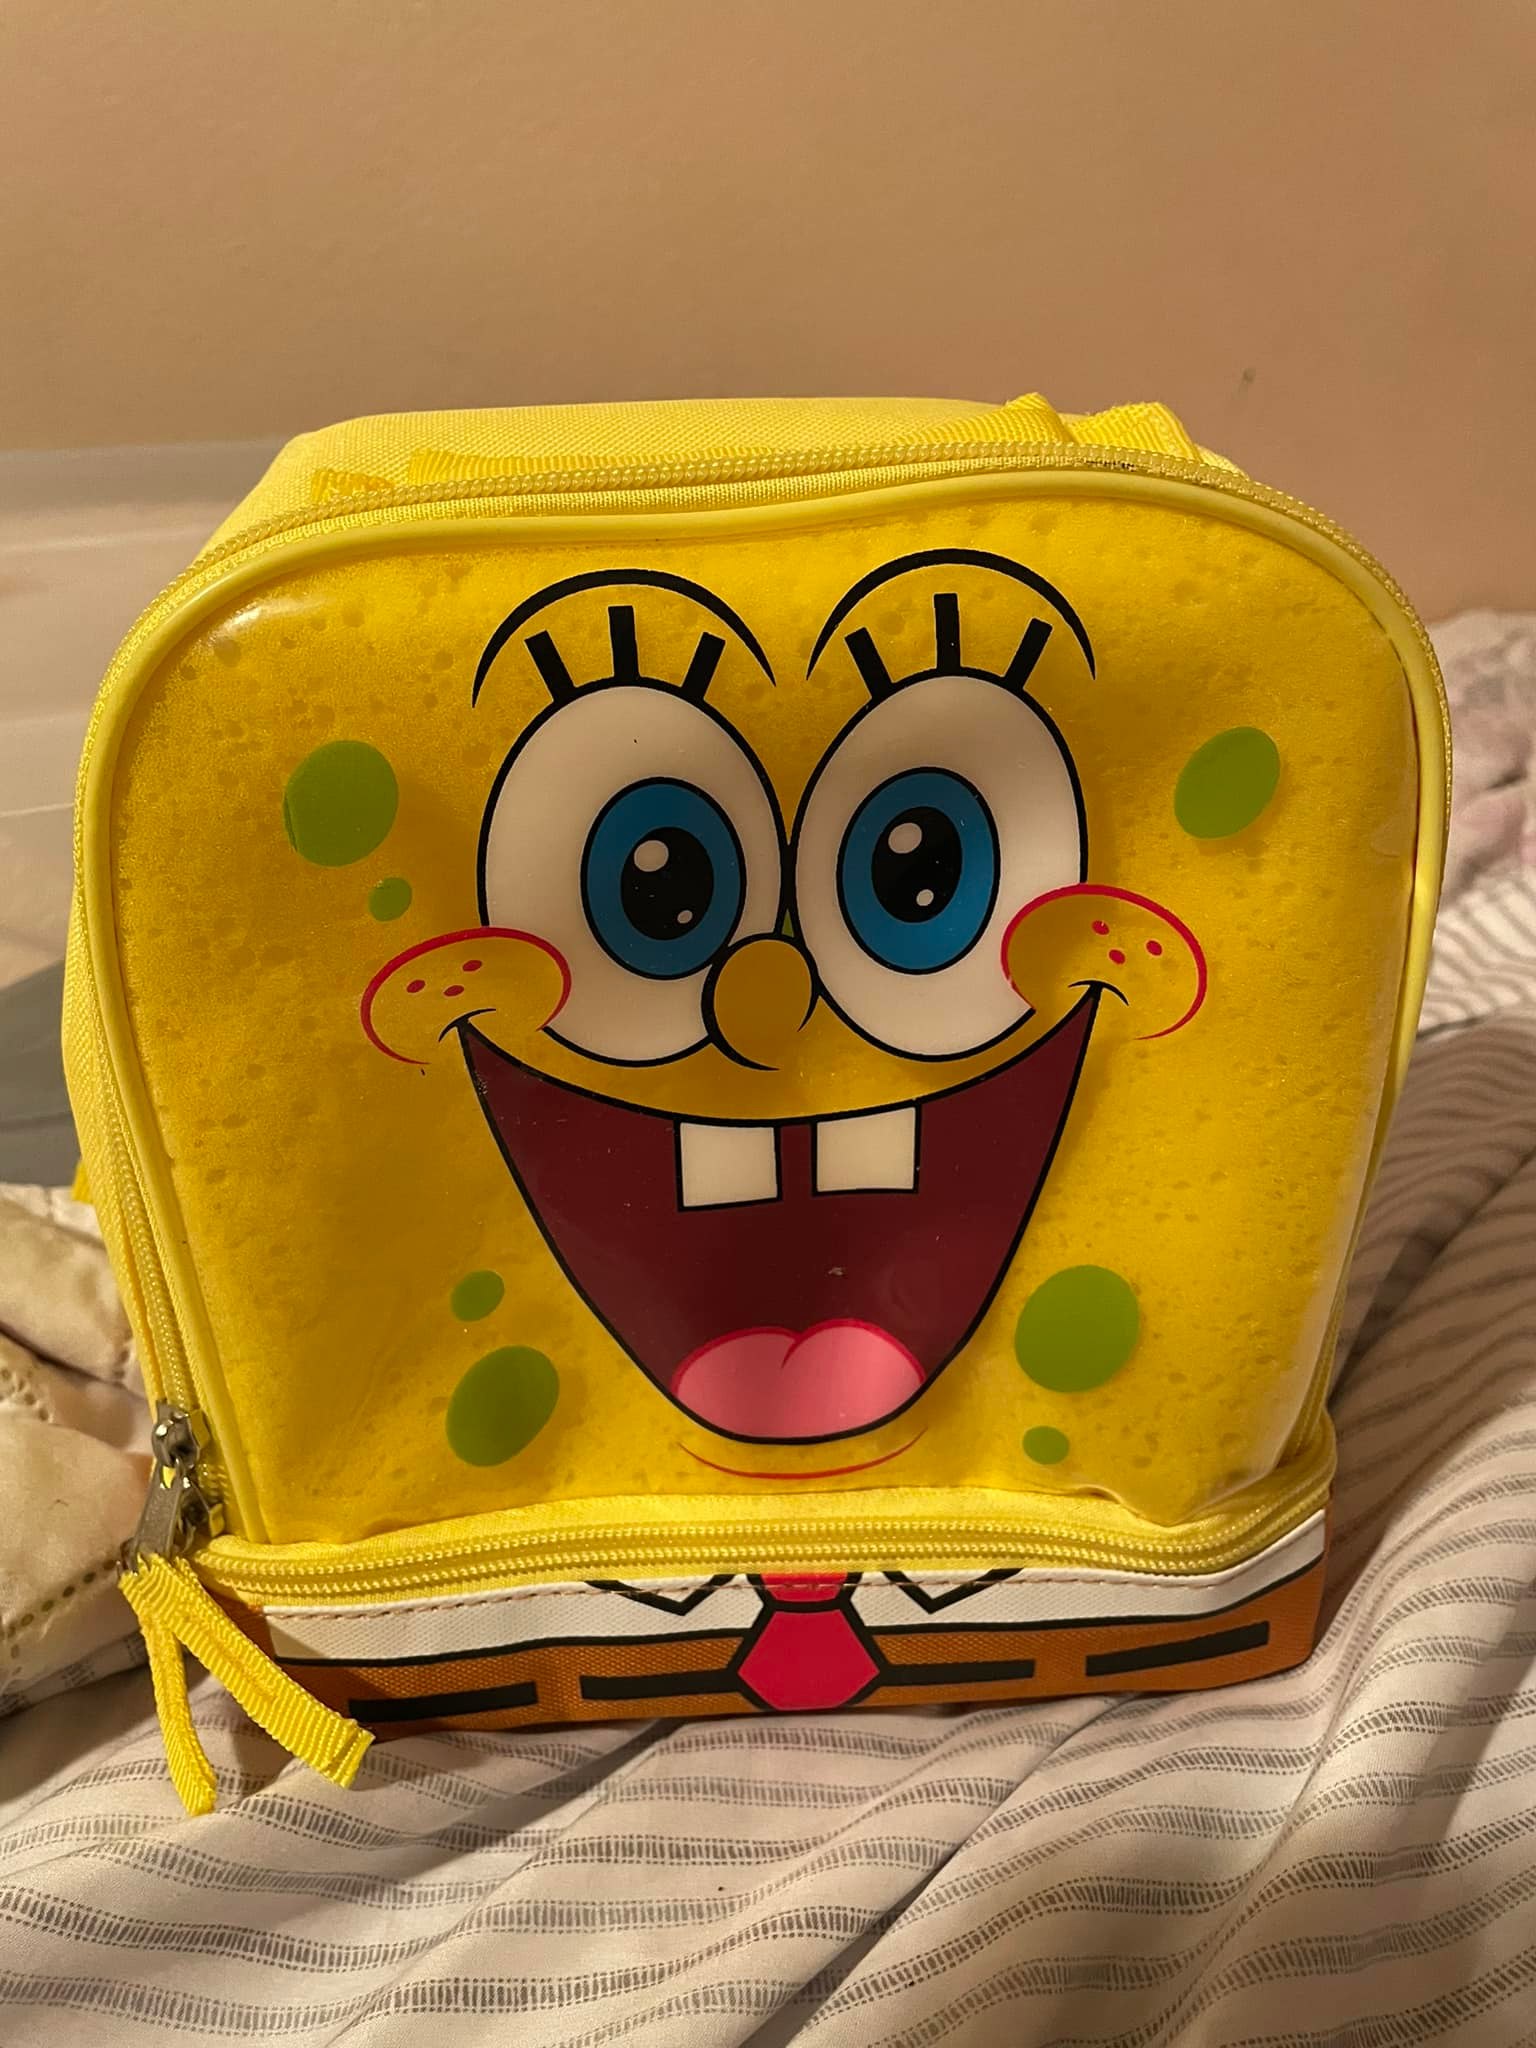 Spongebob Lunch Box by Alyssa--Squarepants on DeviantArt